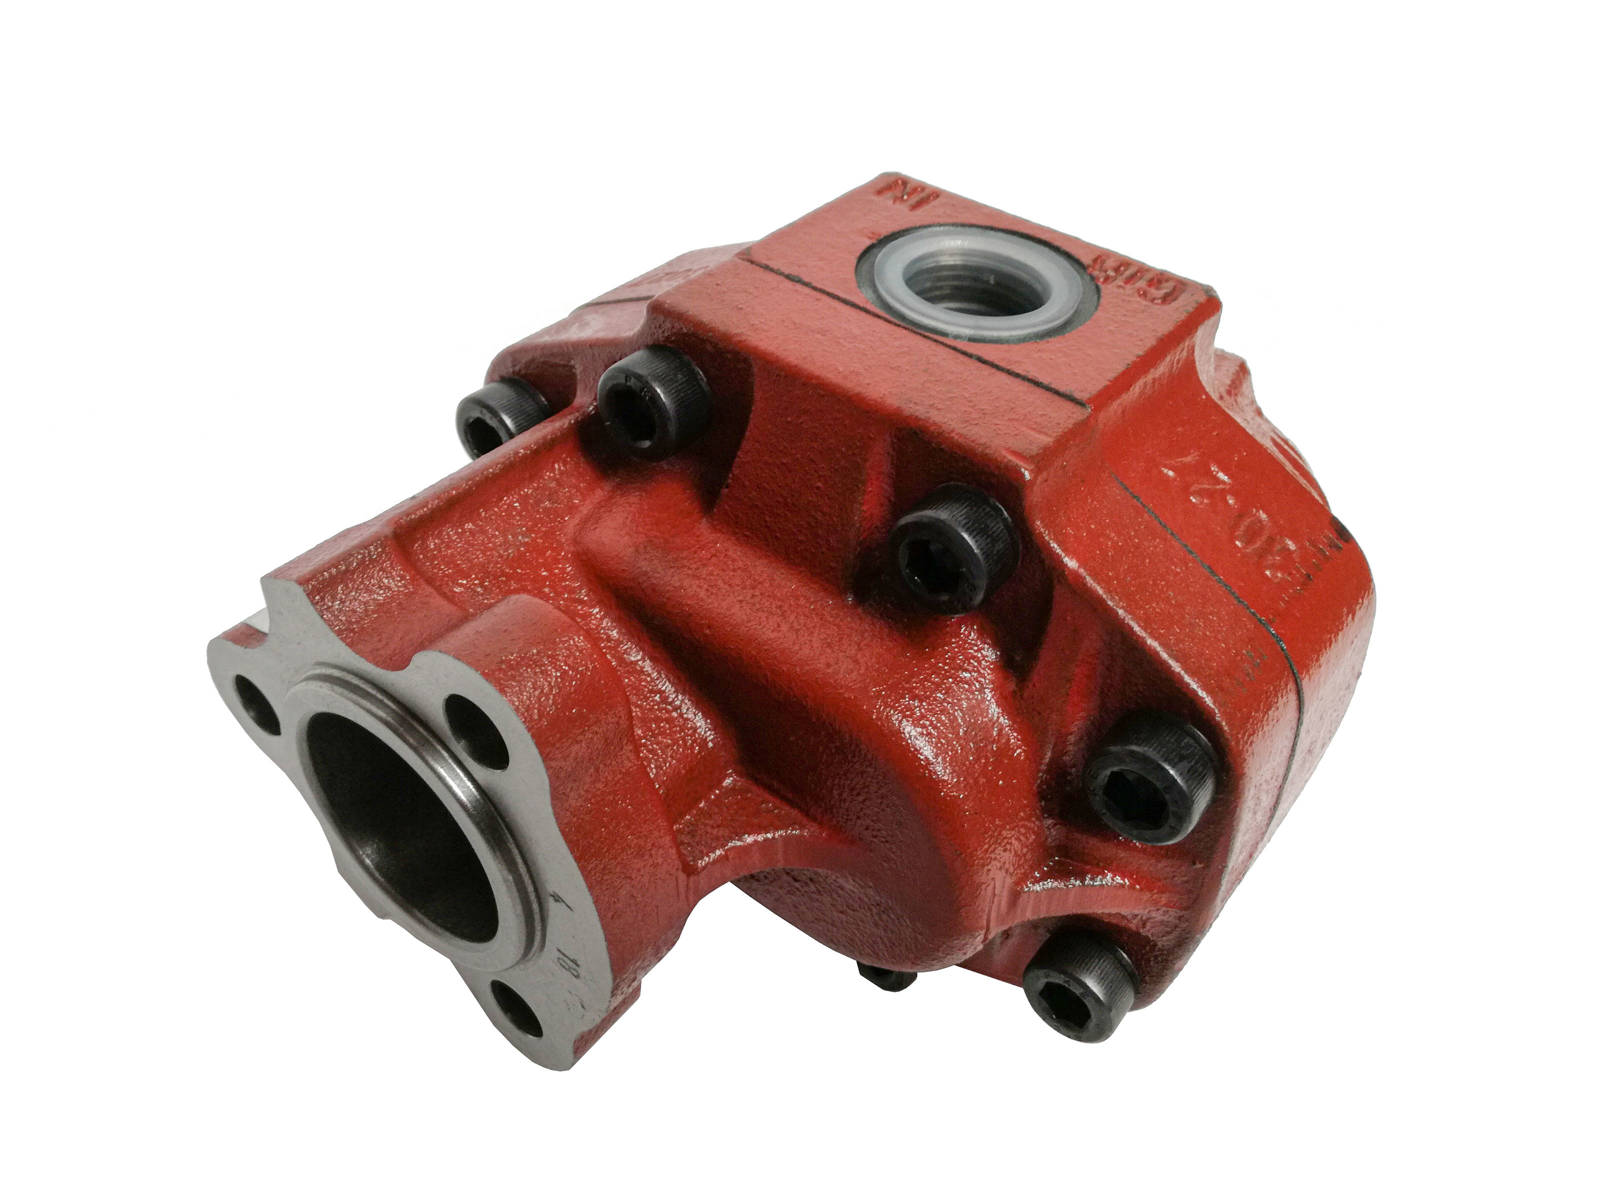 LIWA  Gear pump, type 34, counterclockwise rotation, UNI, 22237034